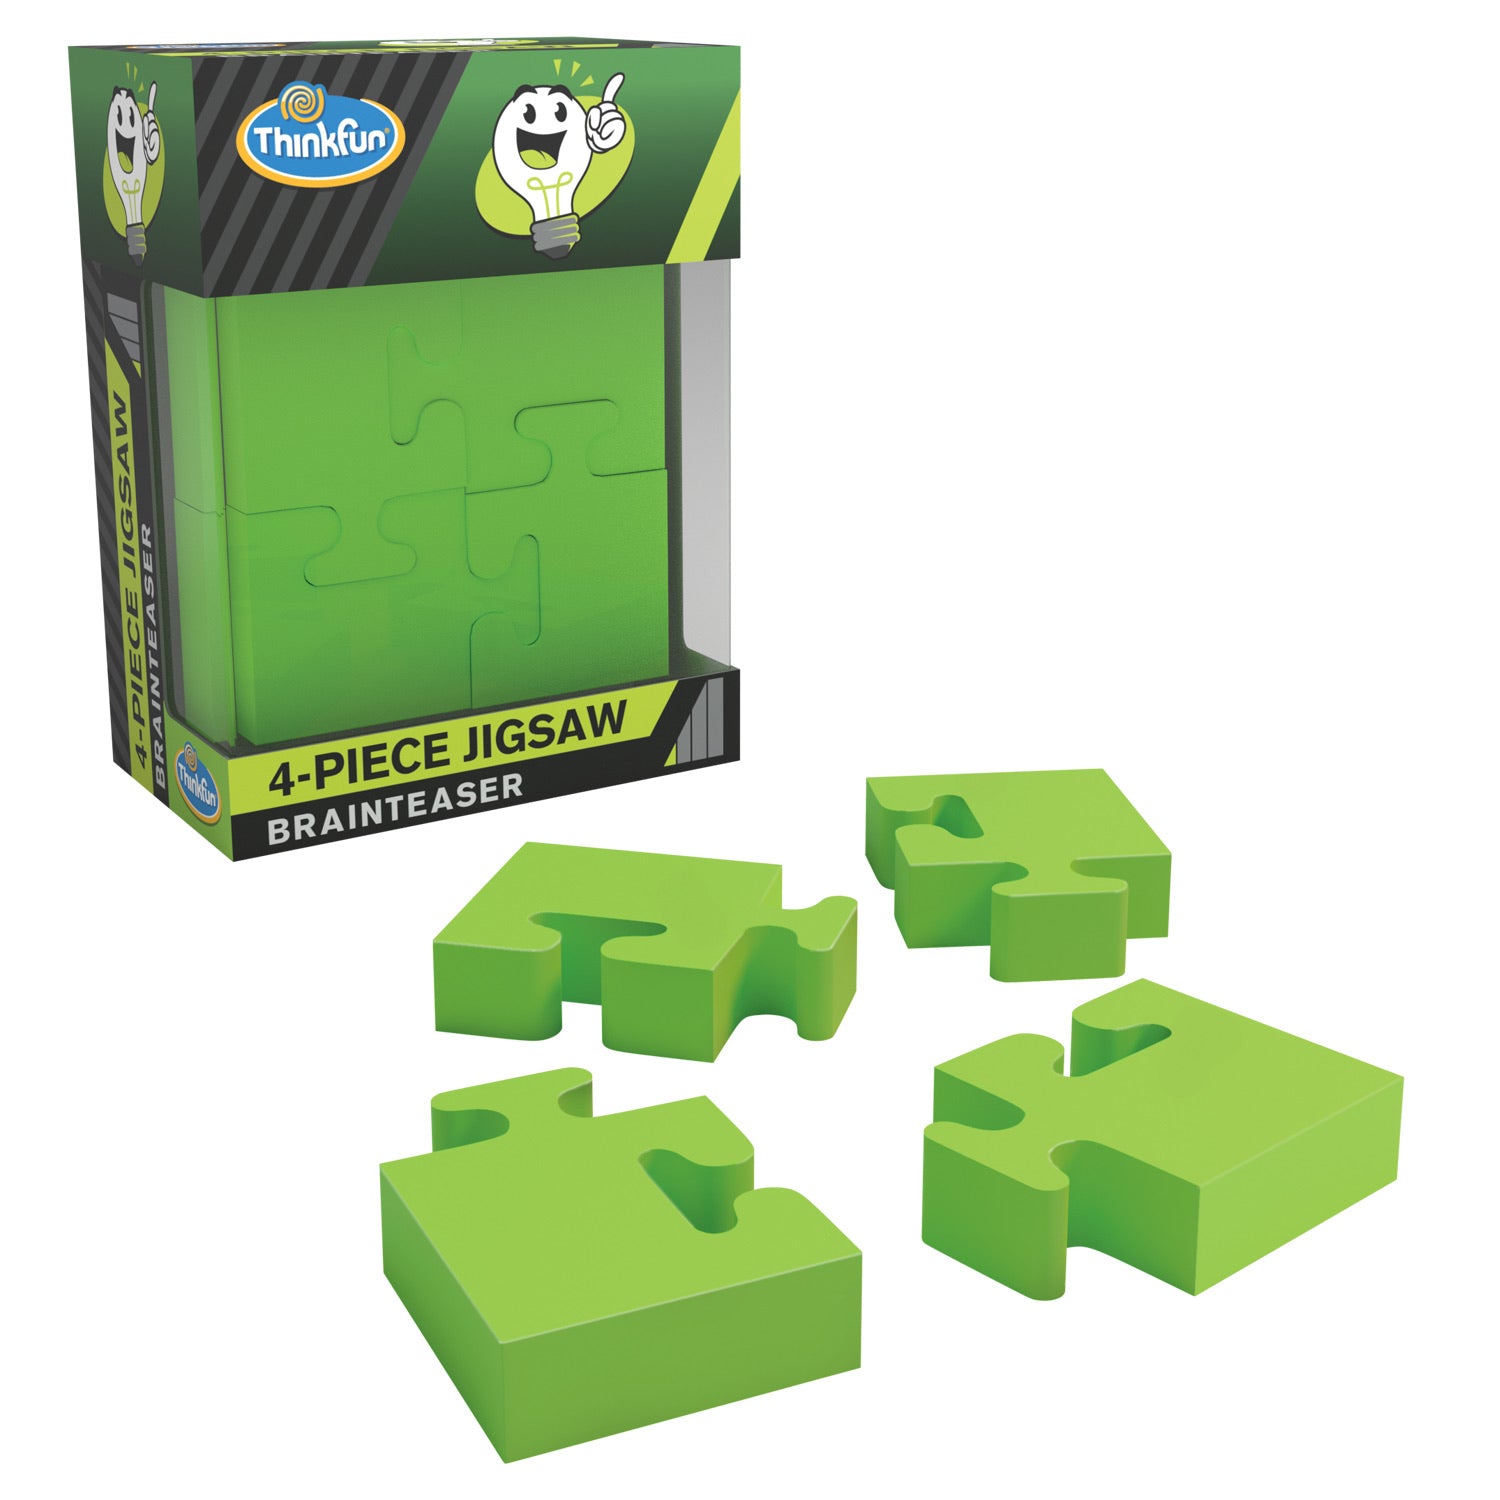 ThinkFun 4-Piece Jigsaw Brainteaser - El Mercado de Juguetes